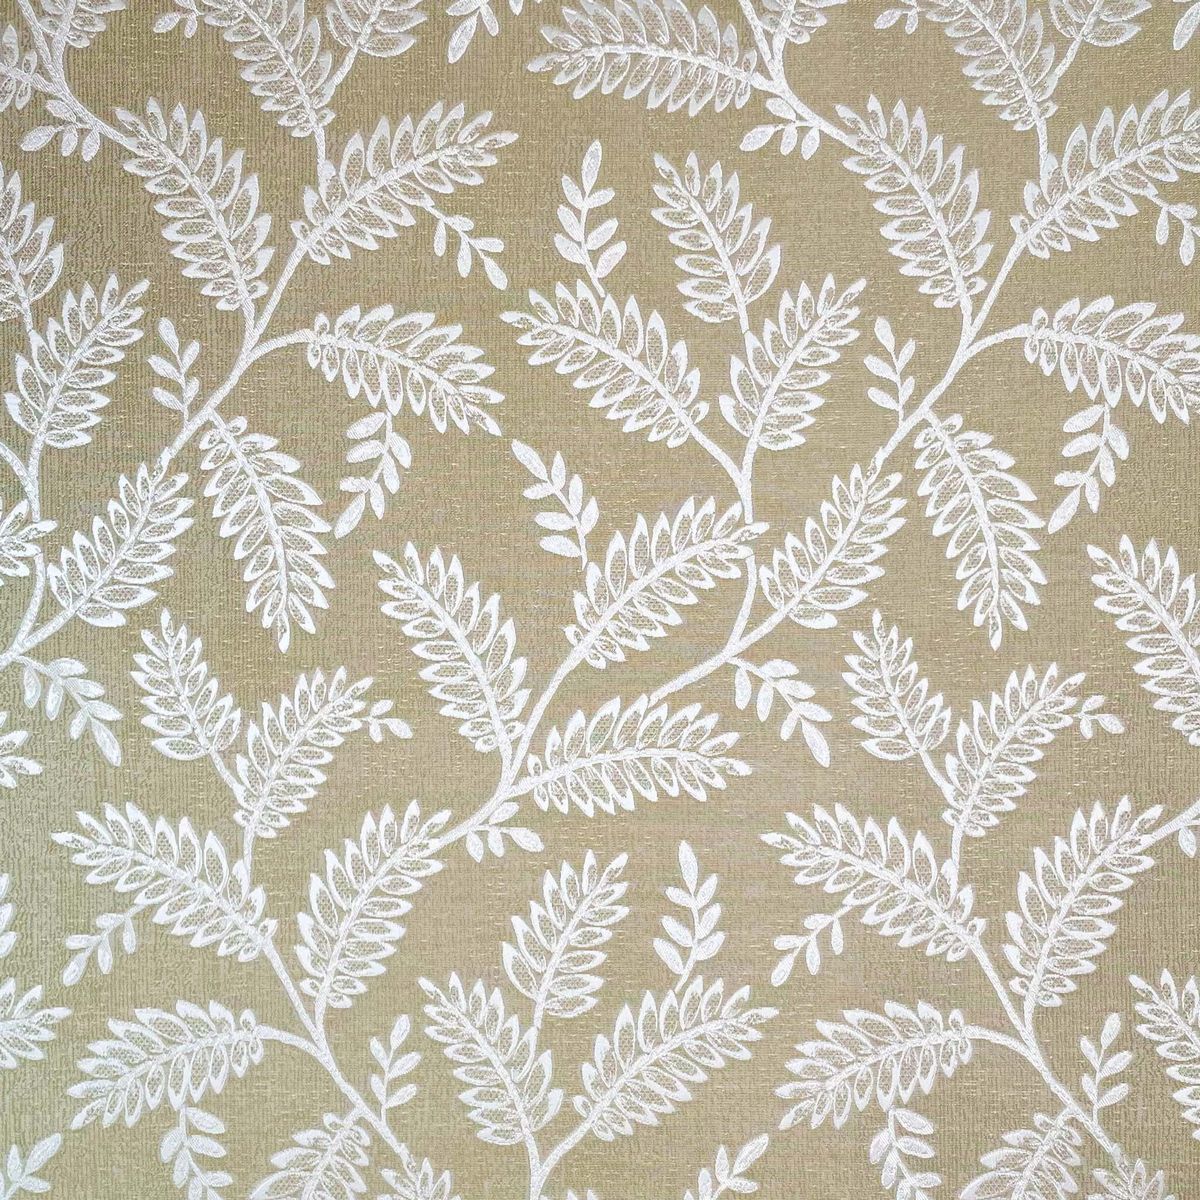 Winterbourne Flax Fabric by Chatham Glyn